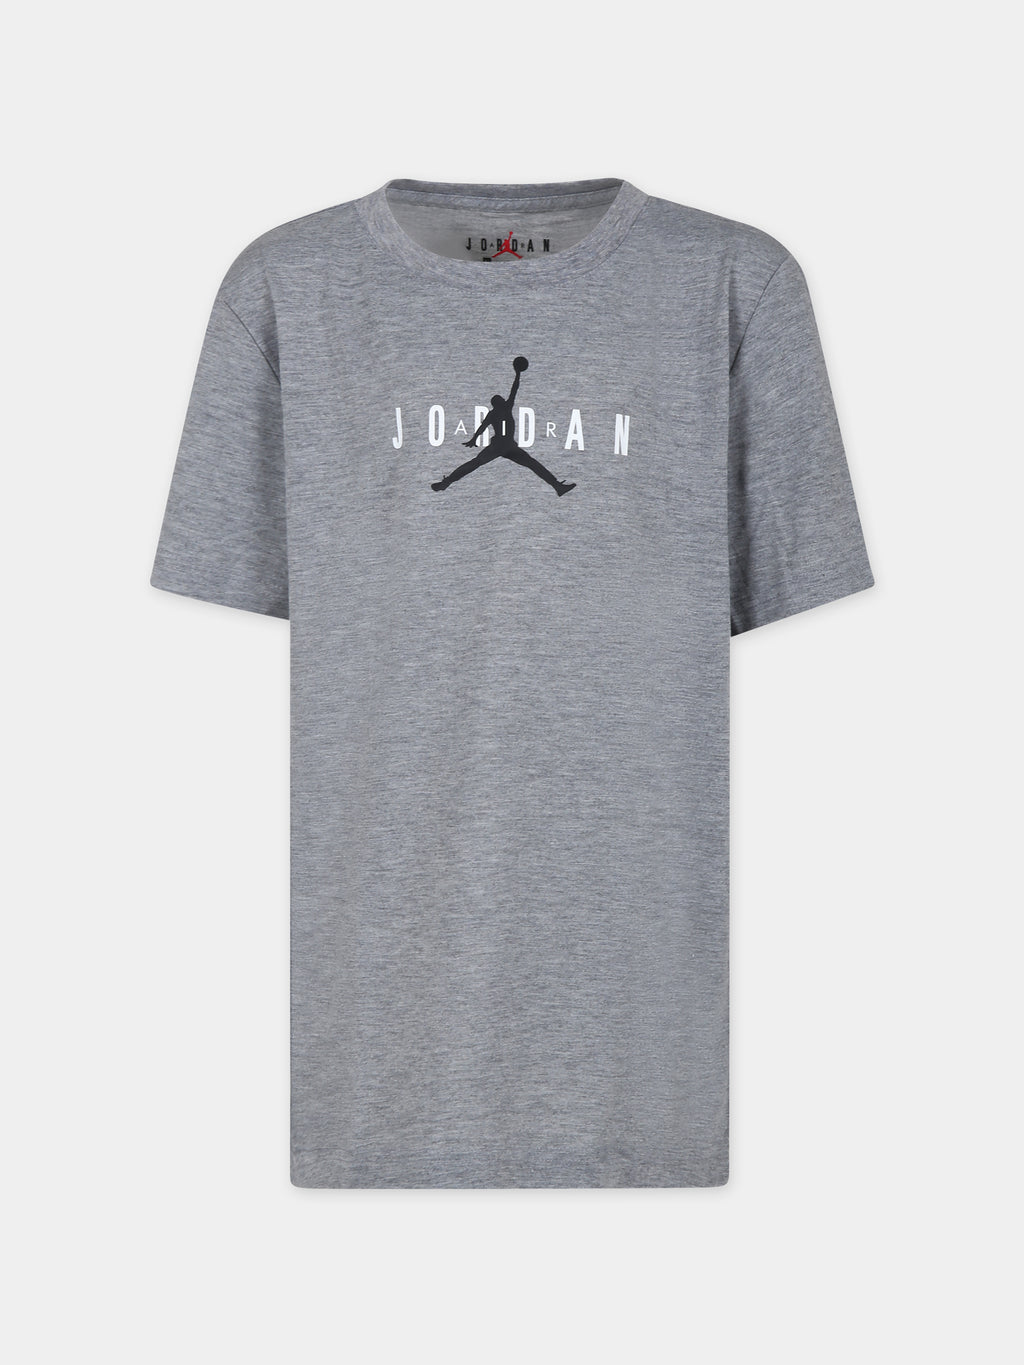 T-shirt grigia per bambino con Jumpman e logo